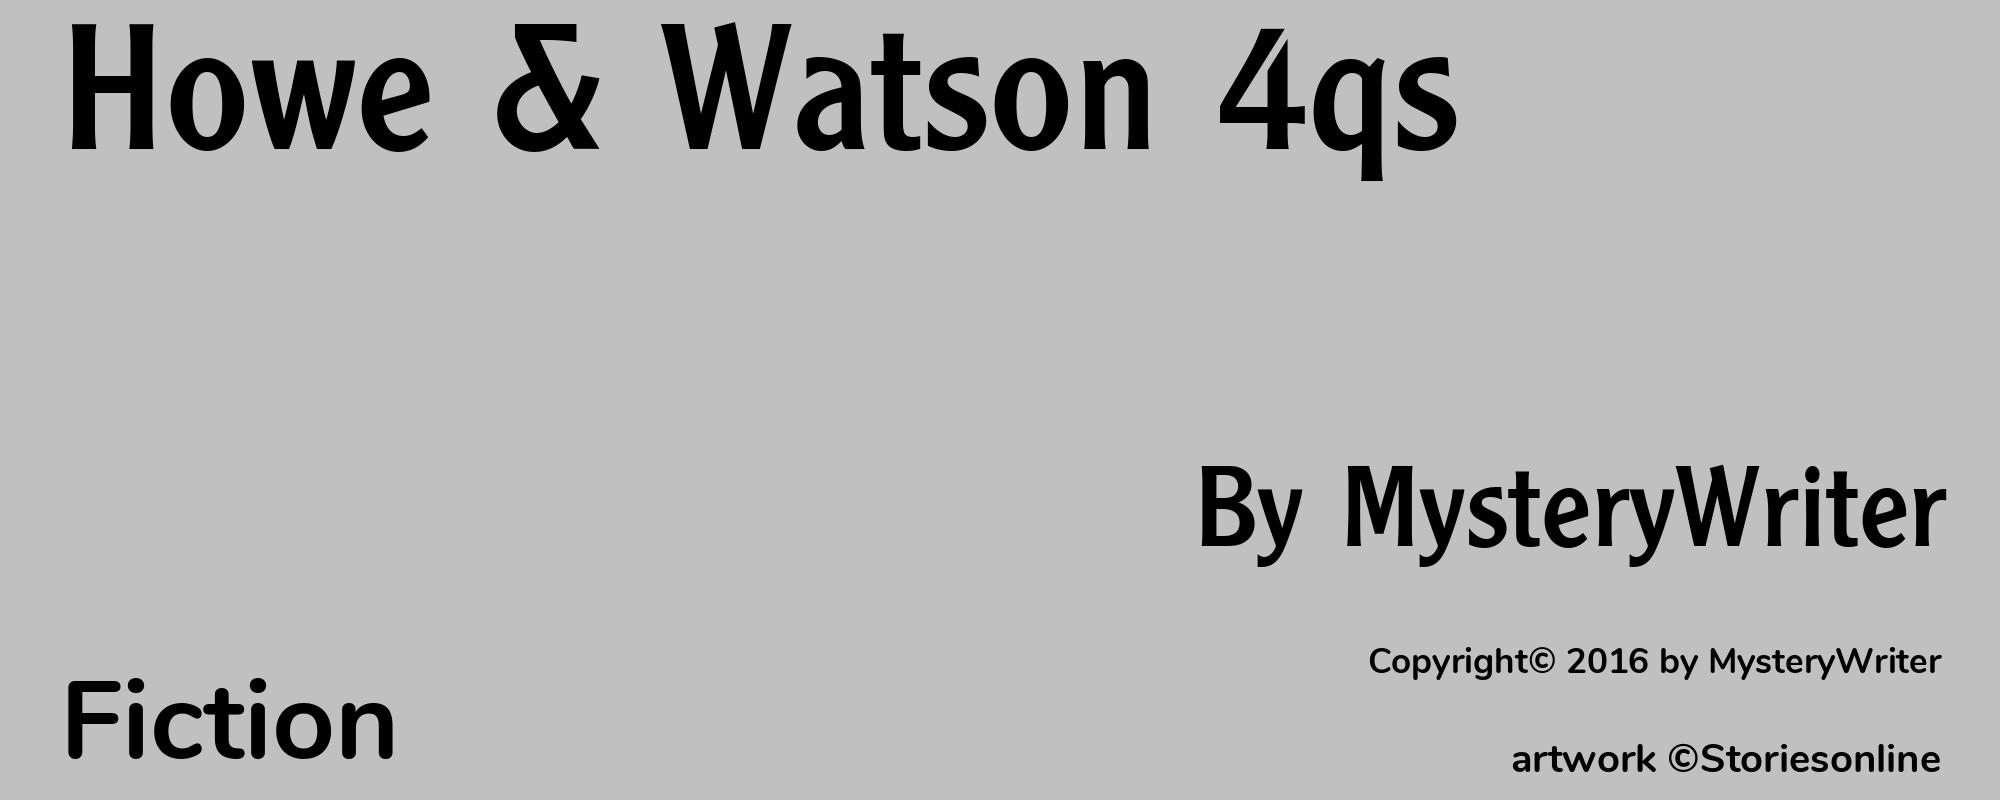 Howe & Watson 4qs - Cover